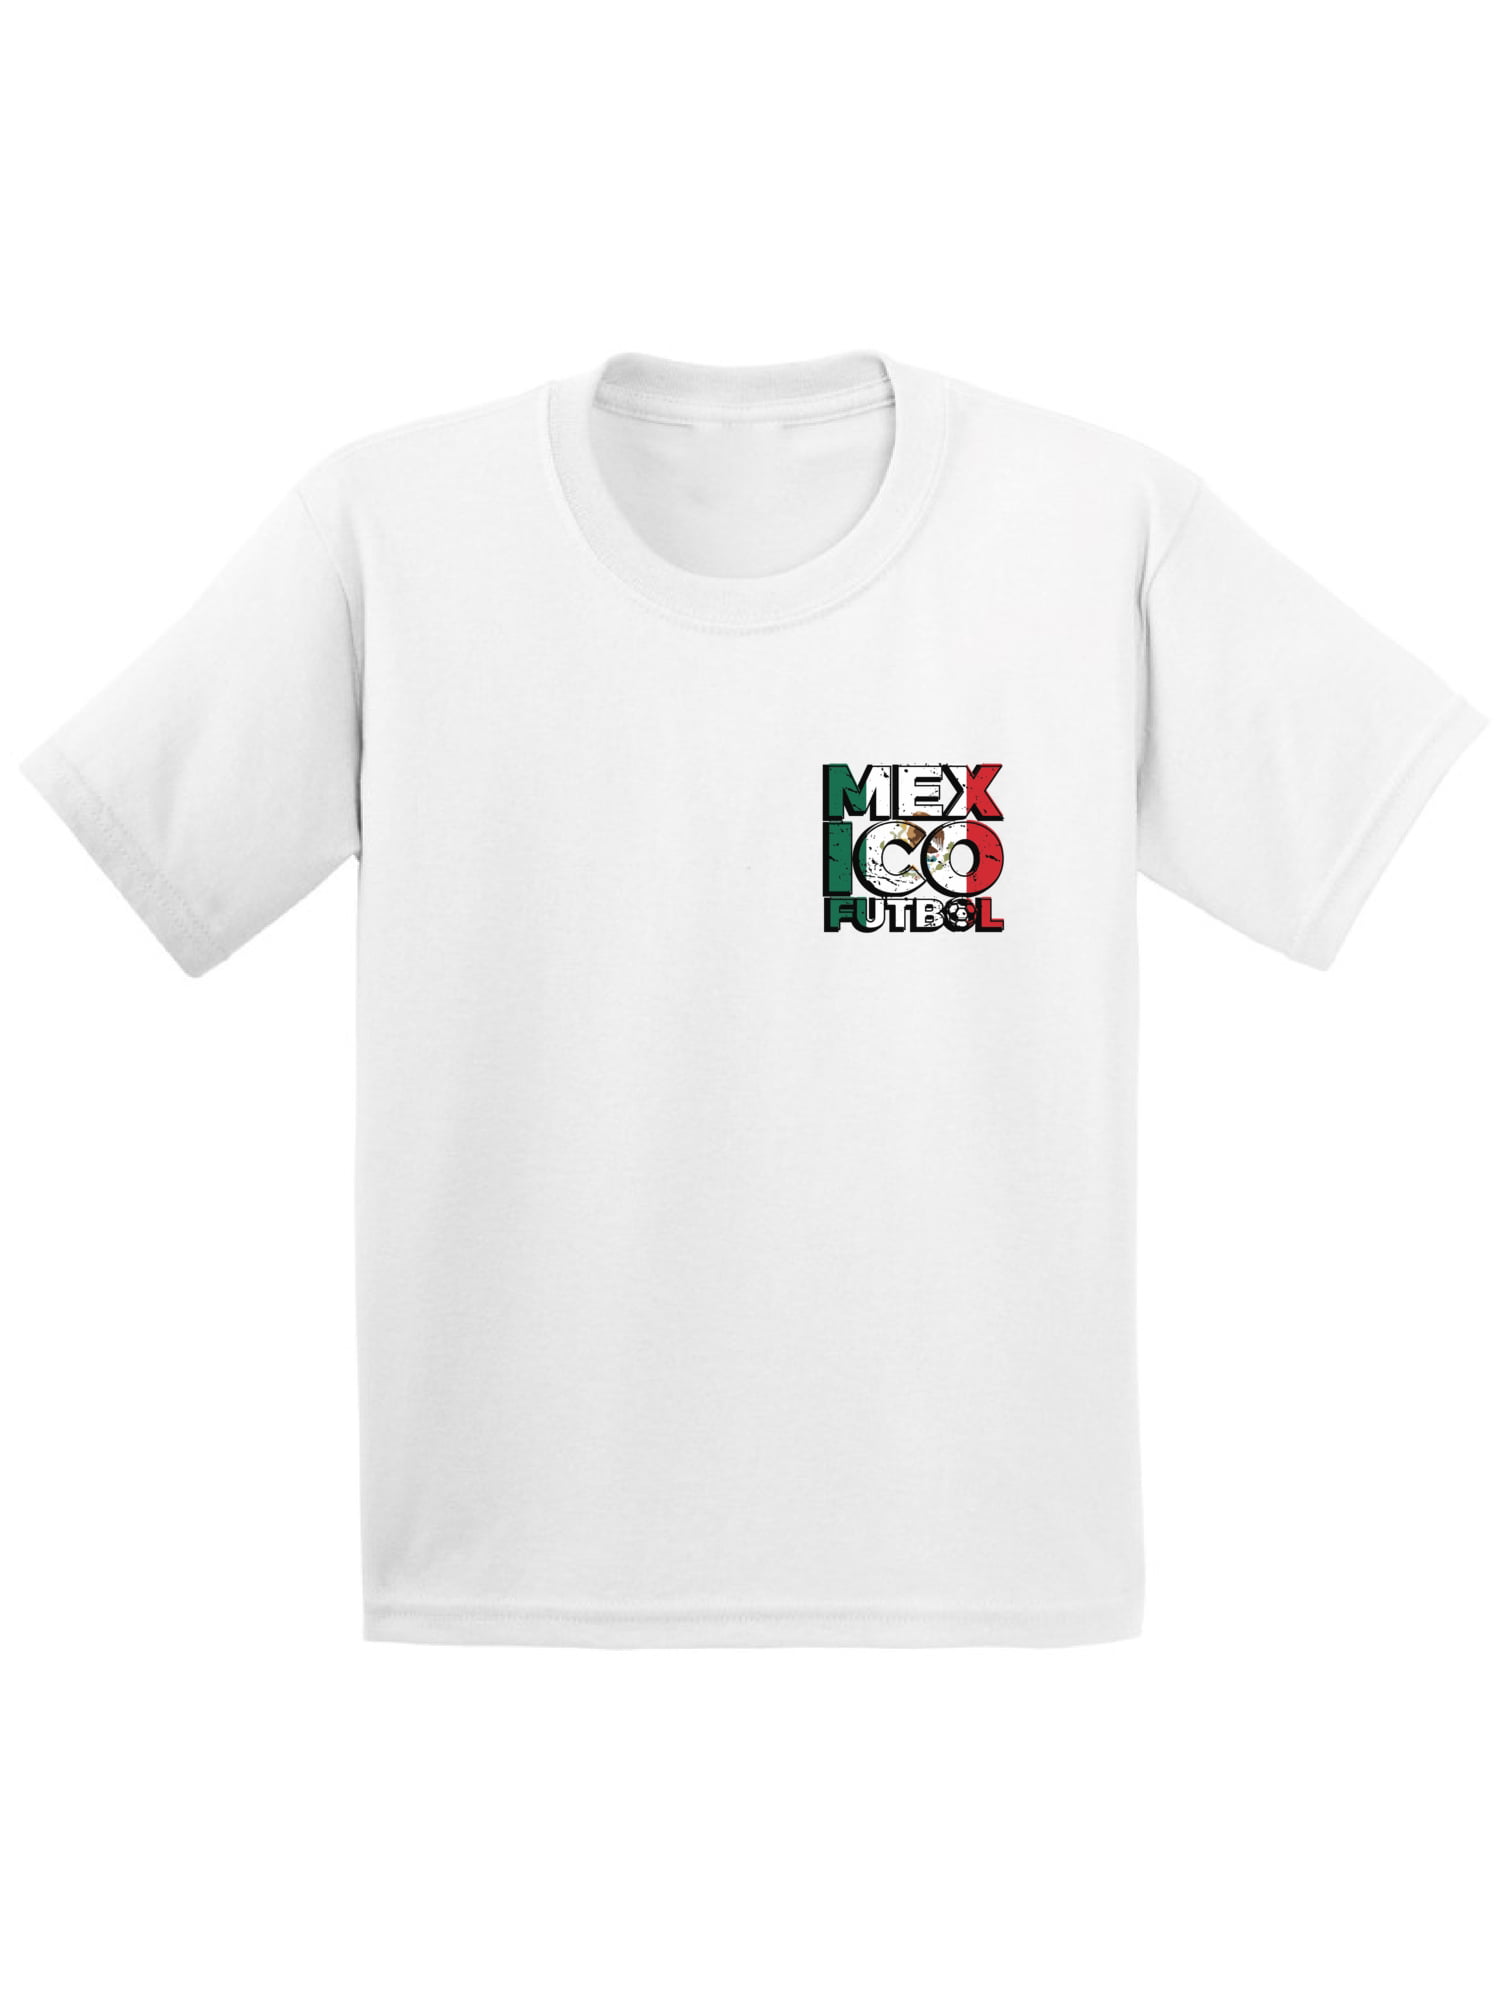 soccer shirts mexico